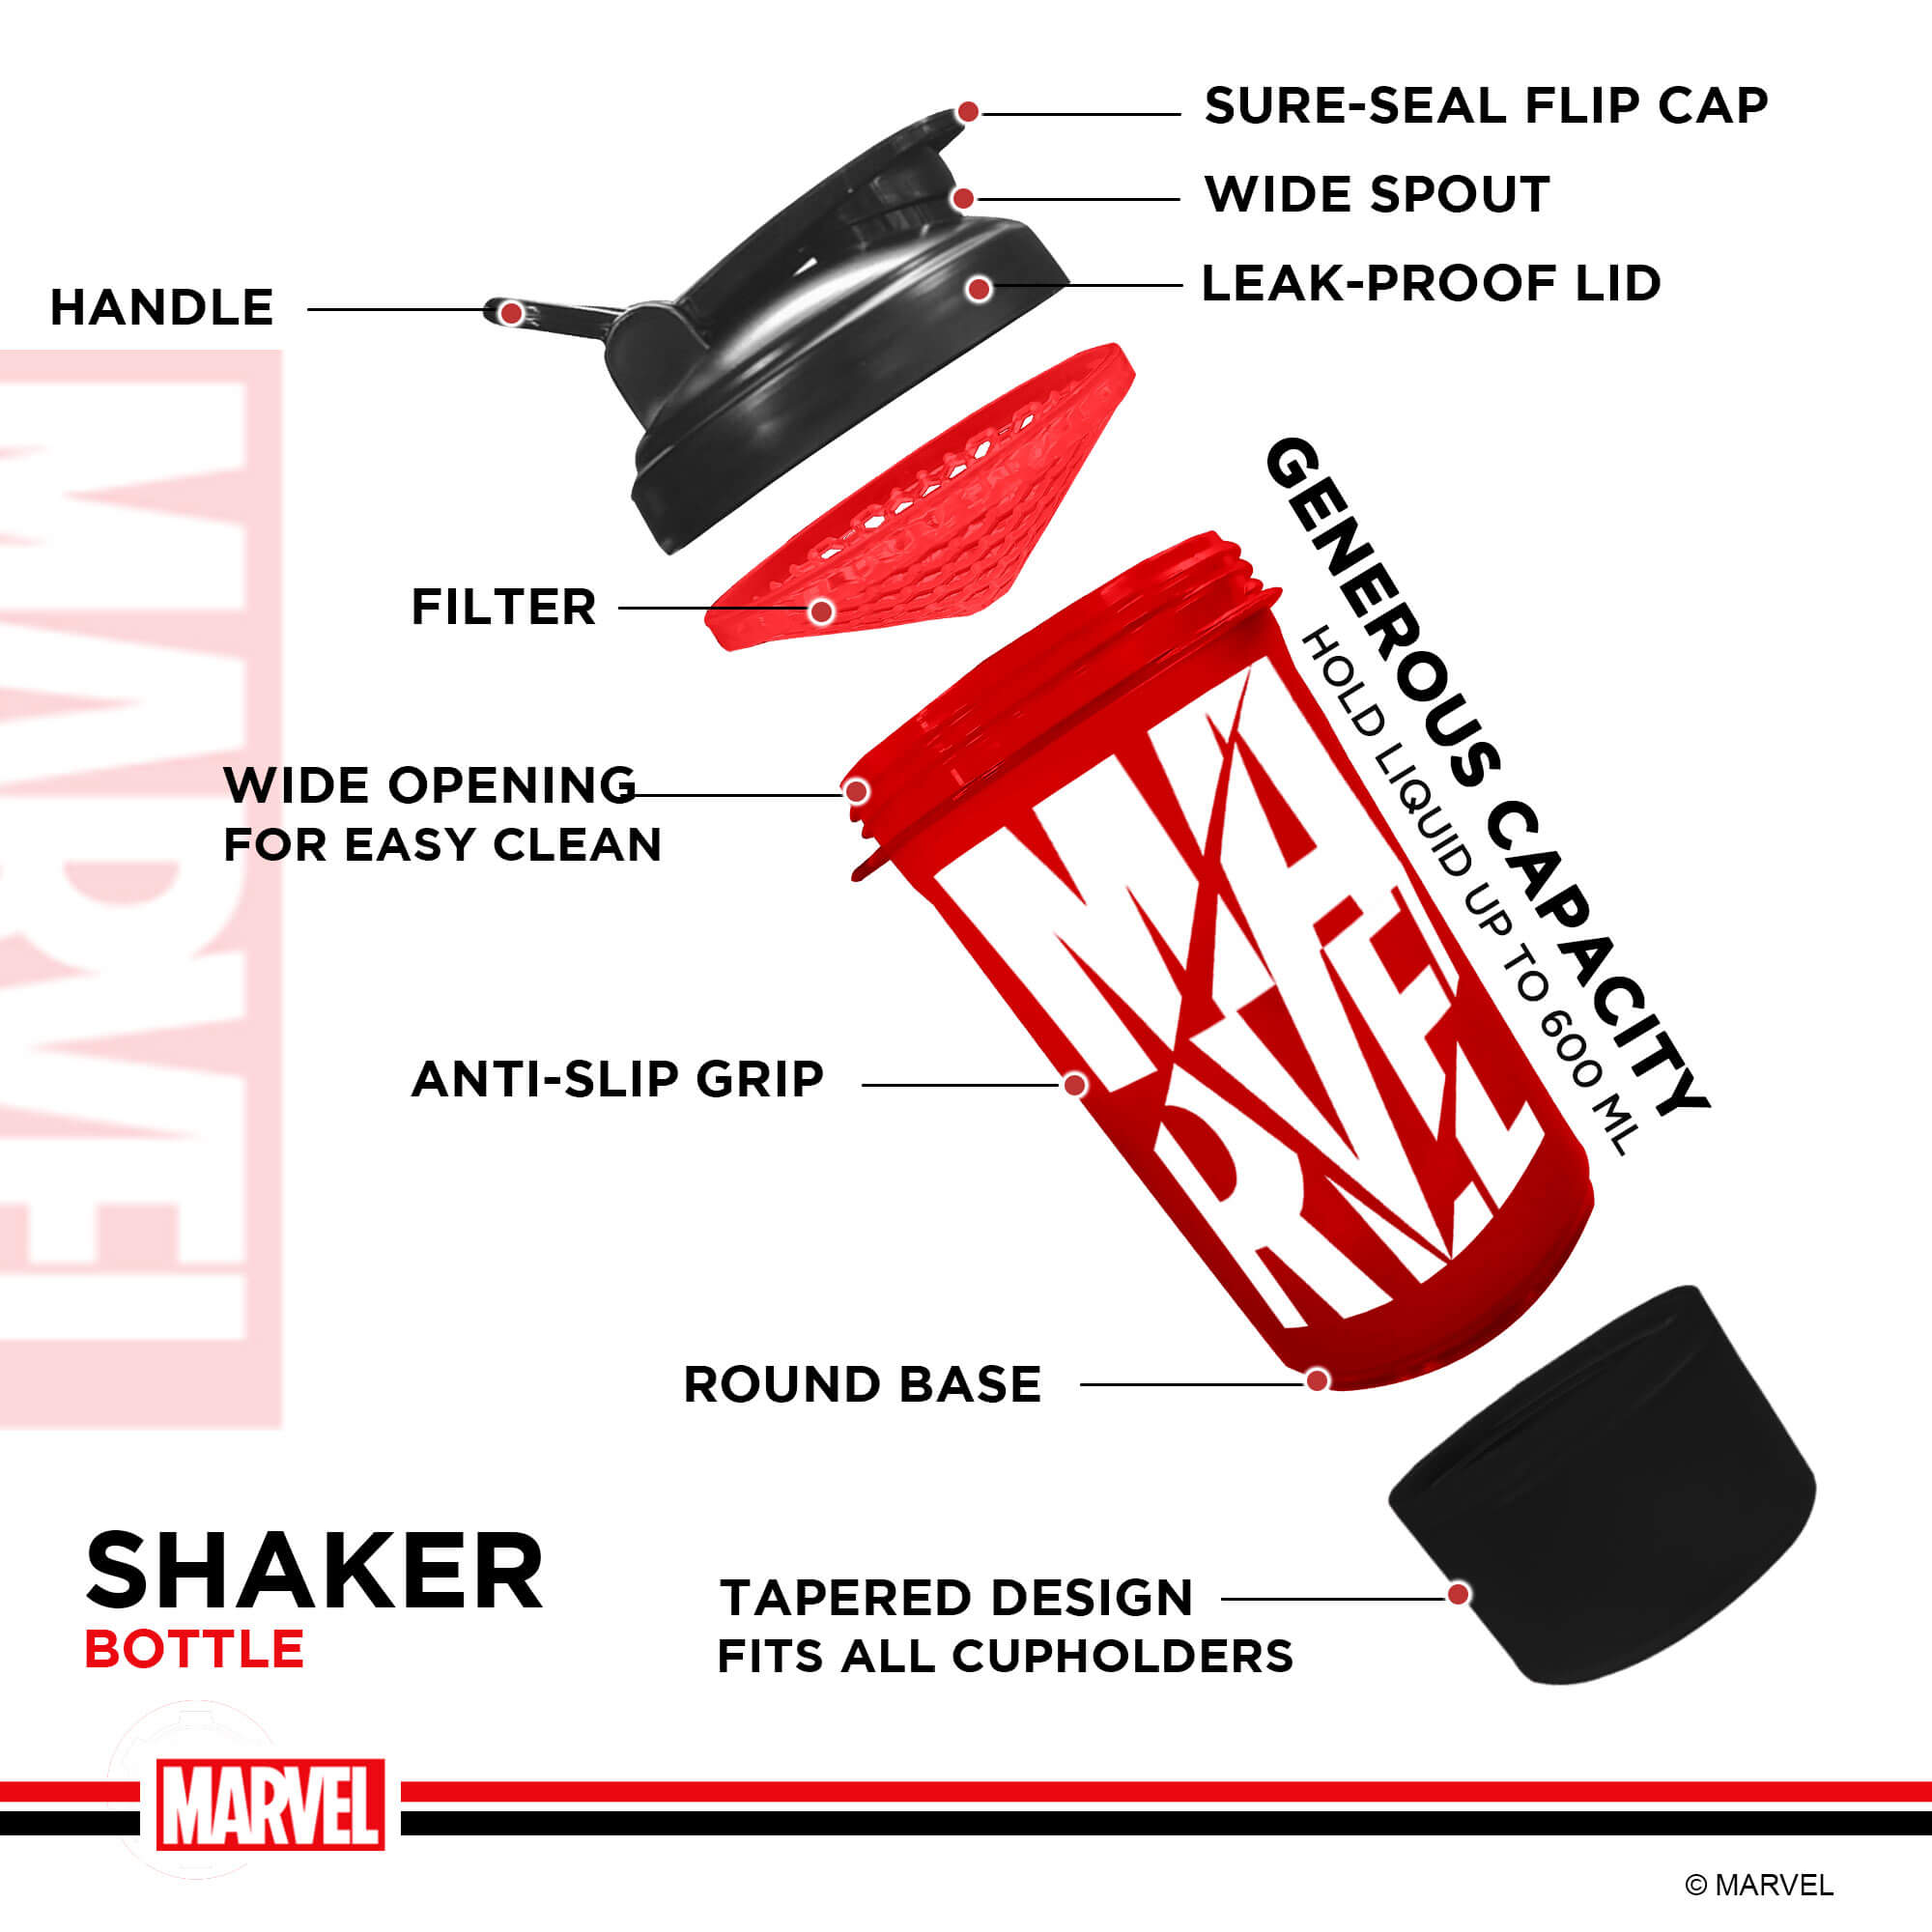 PowerMax x Marvel MSB-6S-M-RED (600ml) Marvel Protein Shaker Bottle with Single Storage